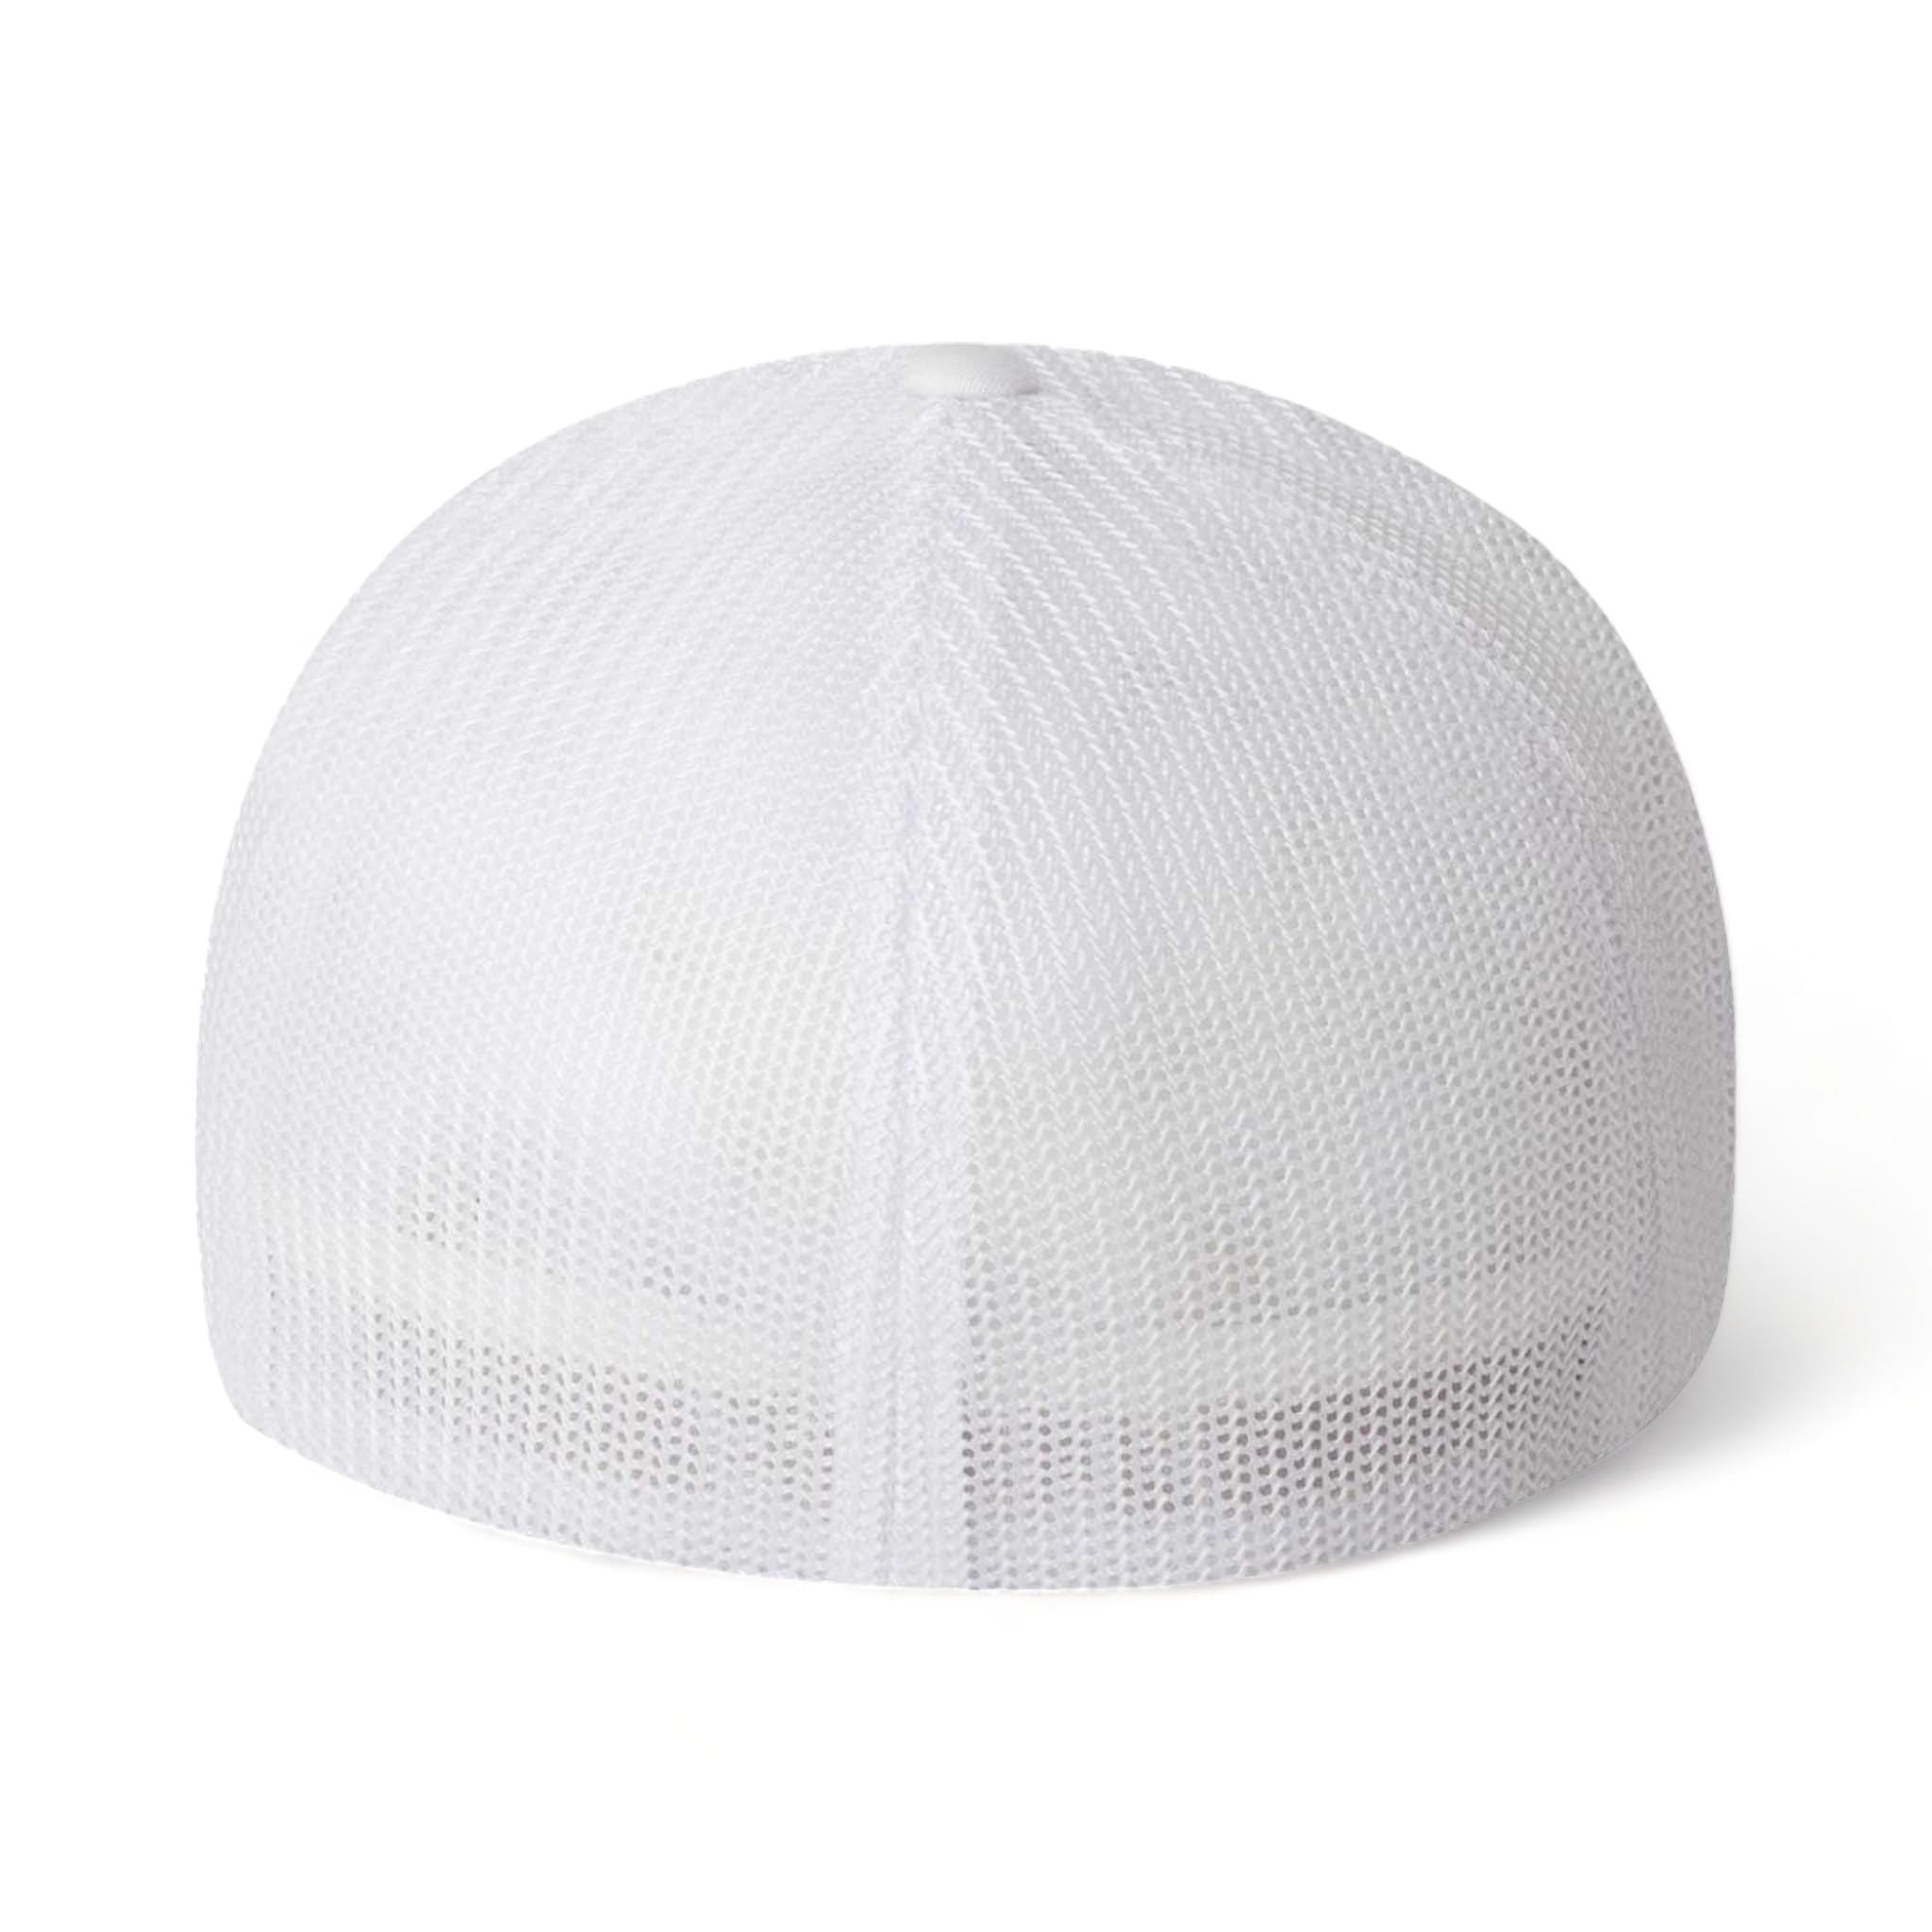 Back view of Flexfit 6511 custom hat in white